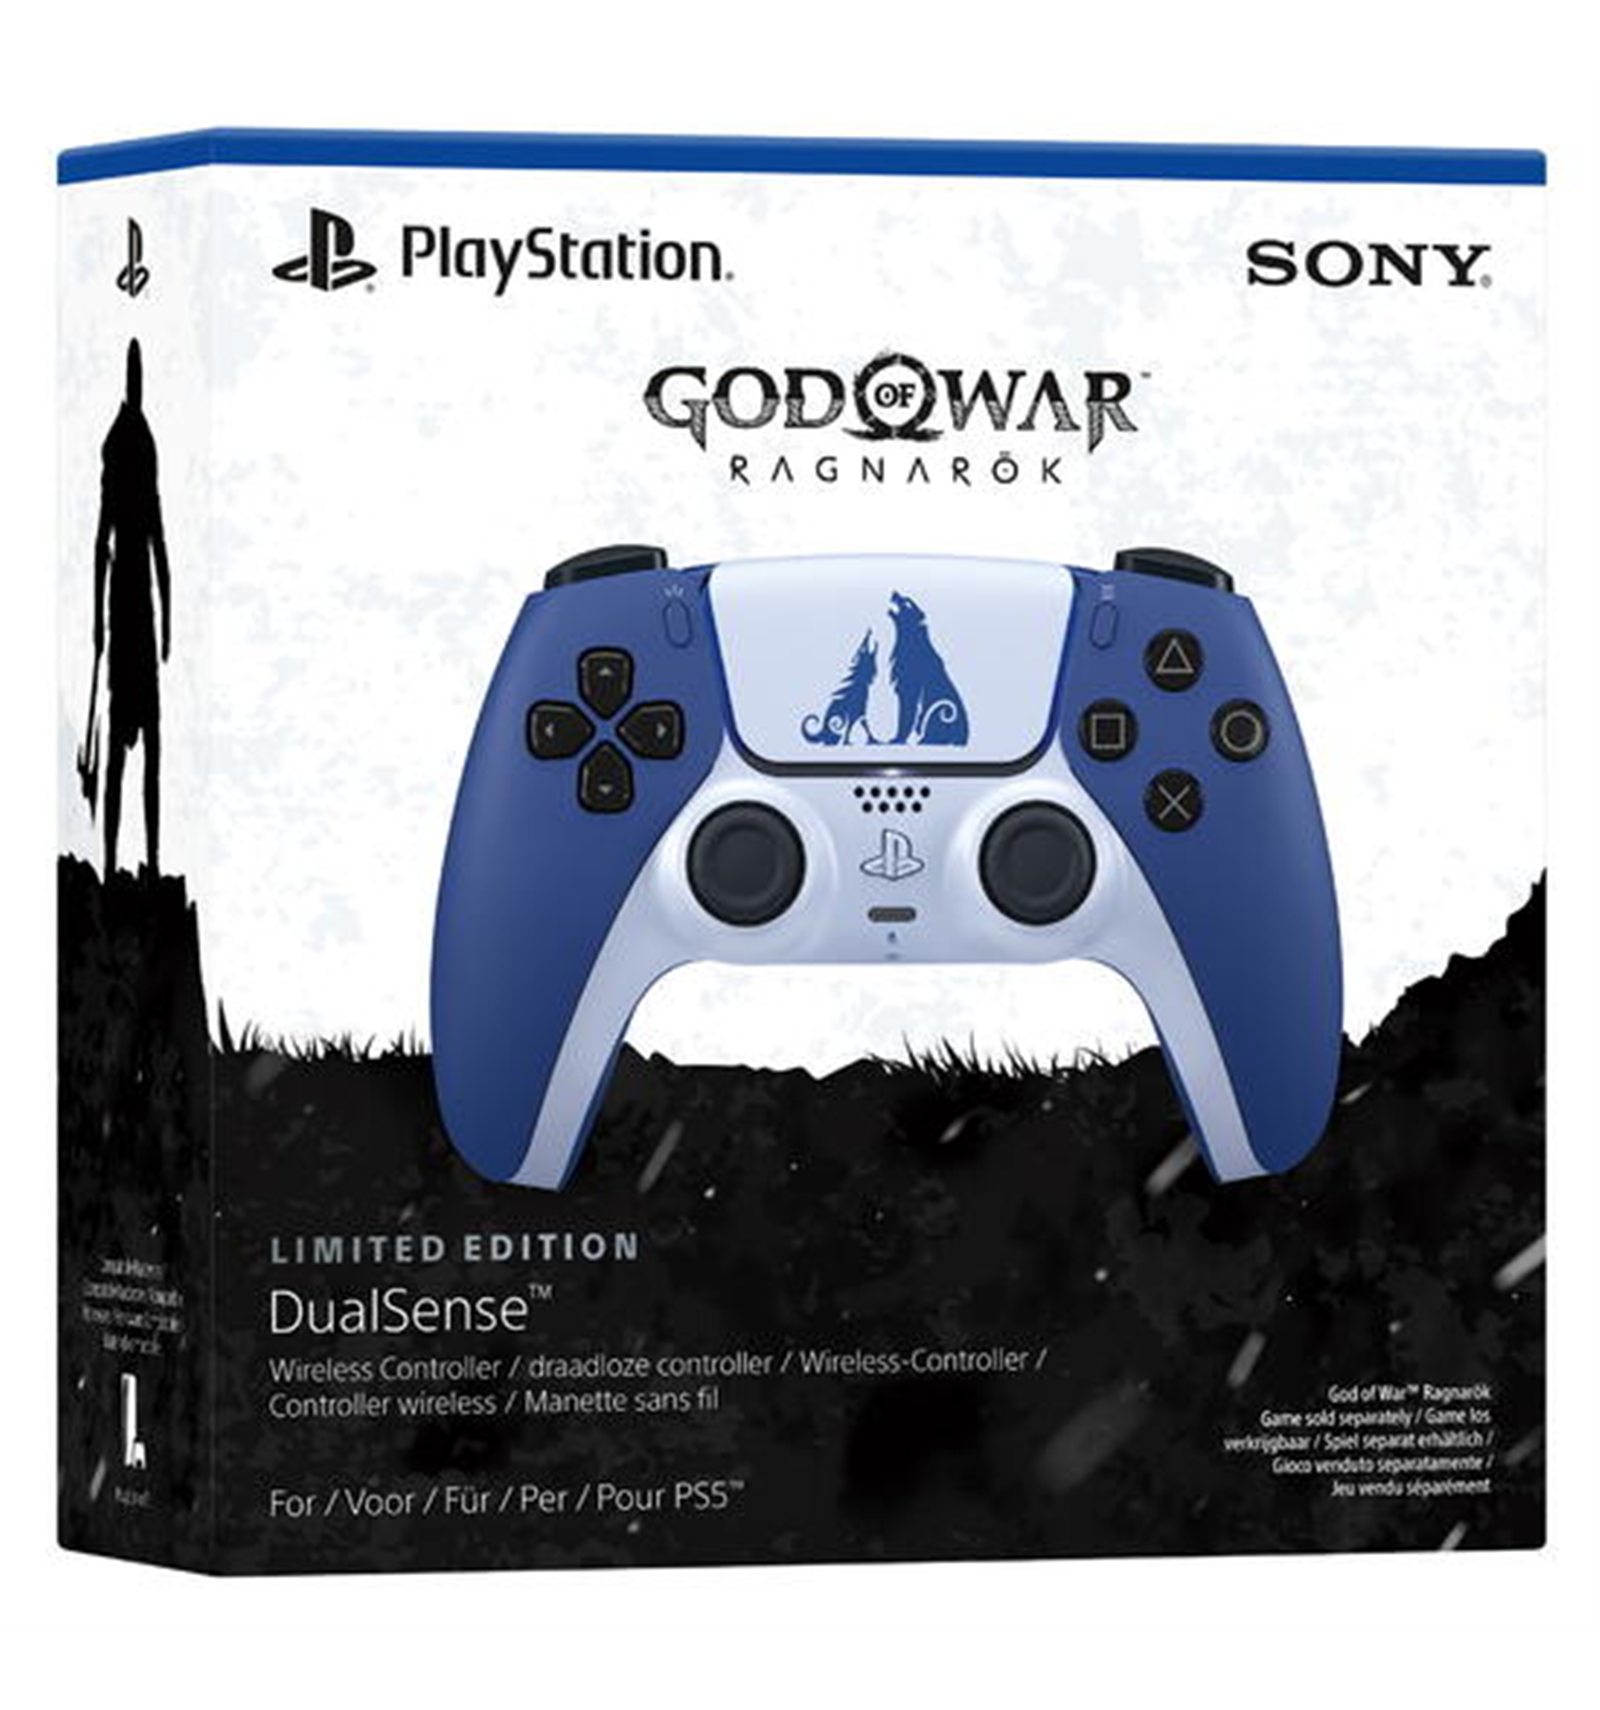 Sony PlayStation 5 - God of War Ragnarok DualSense Wireless Controller  Limited Edition - DaxStore S.R.L.S.